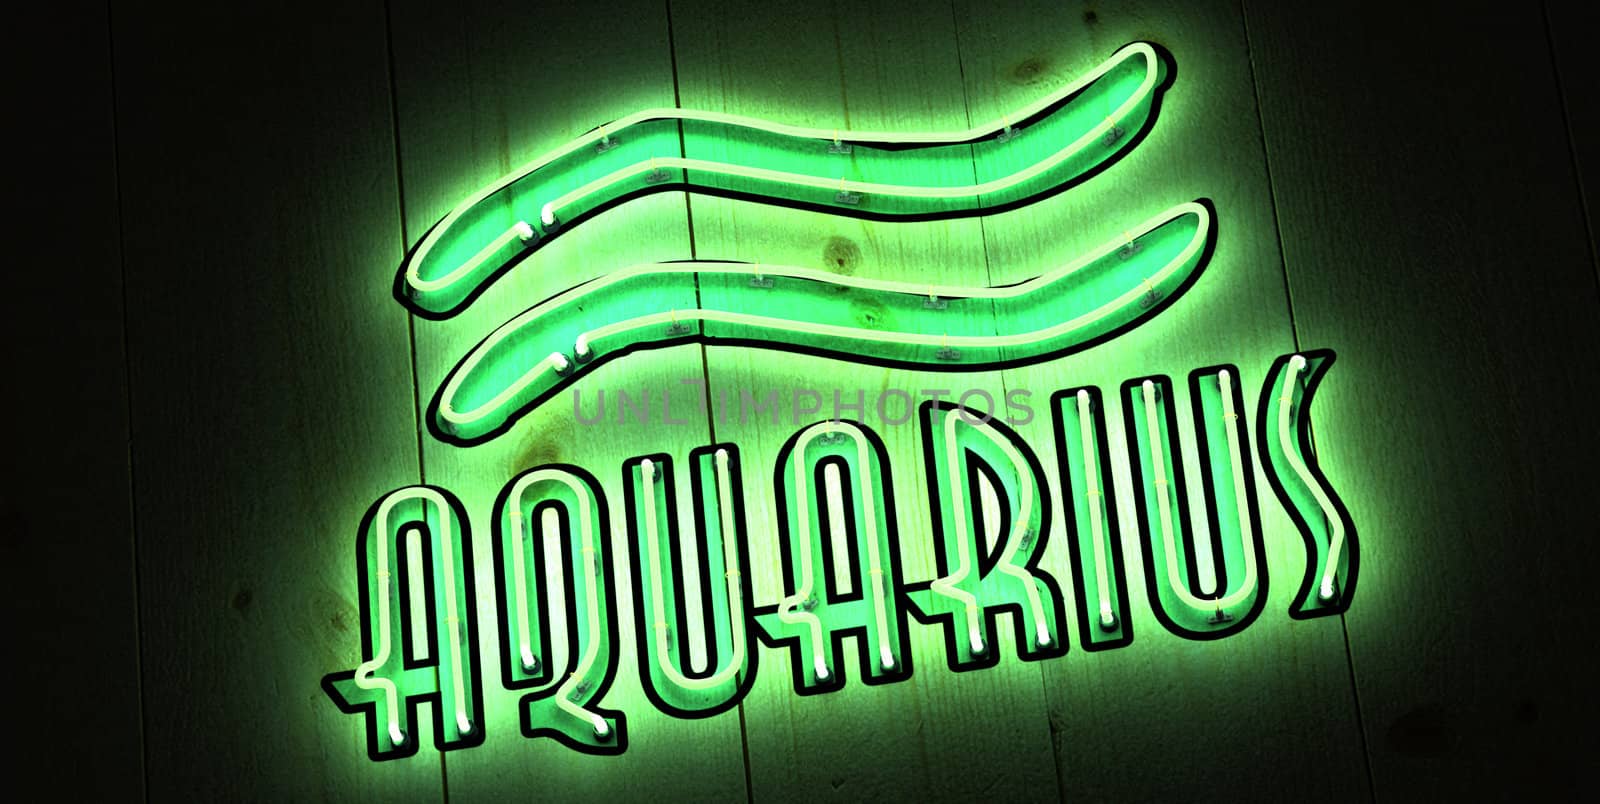 Aquarius Zodiac Sign in Neon by rossstudio